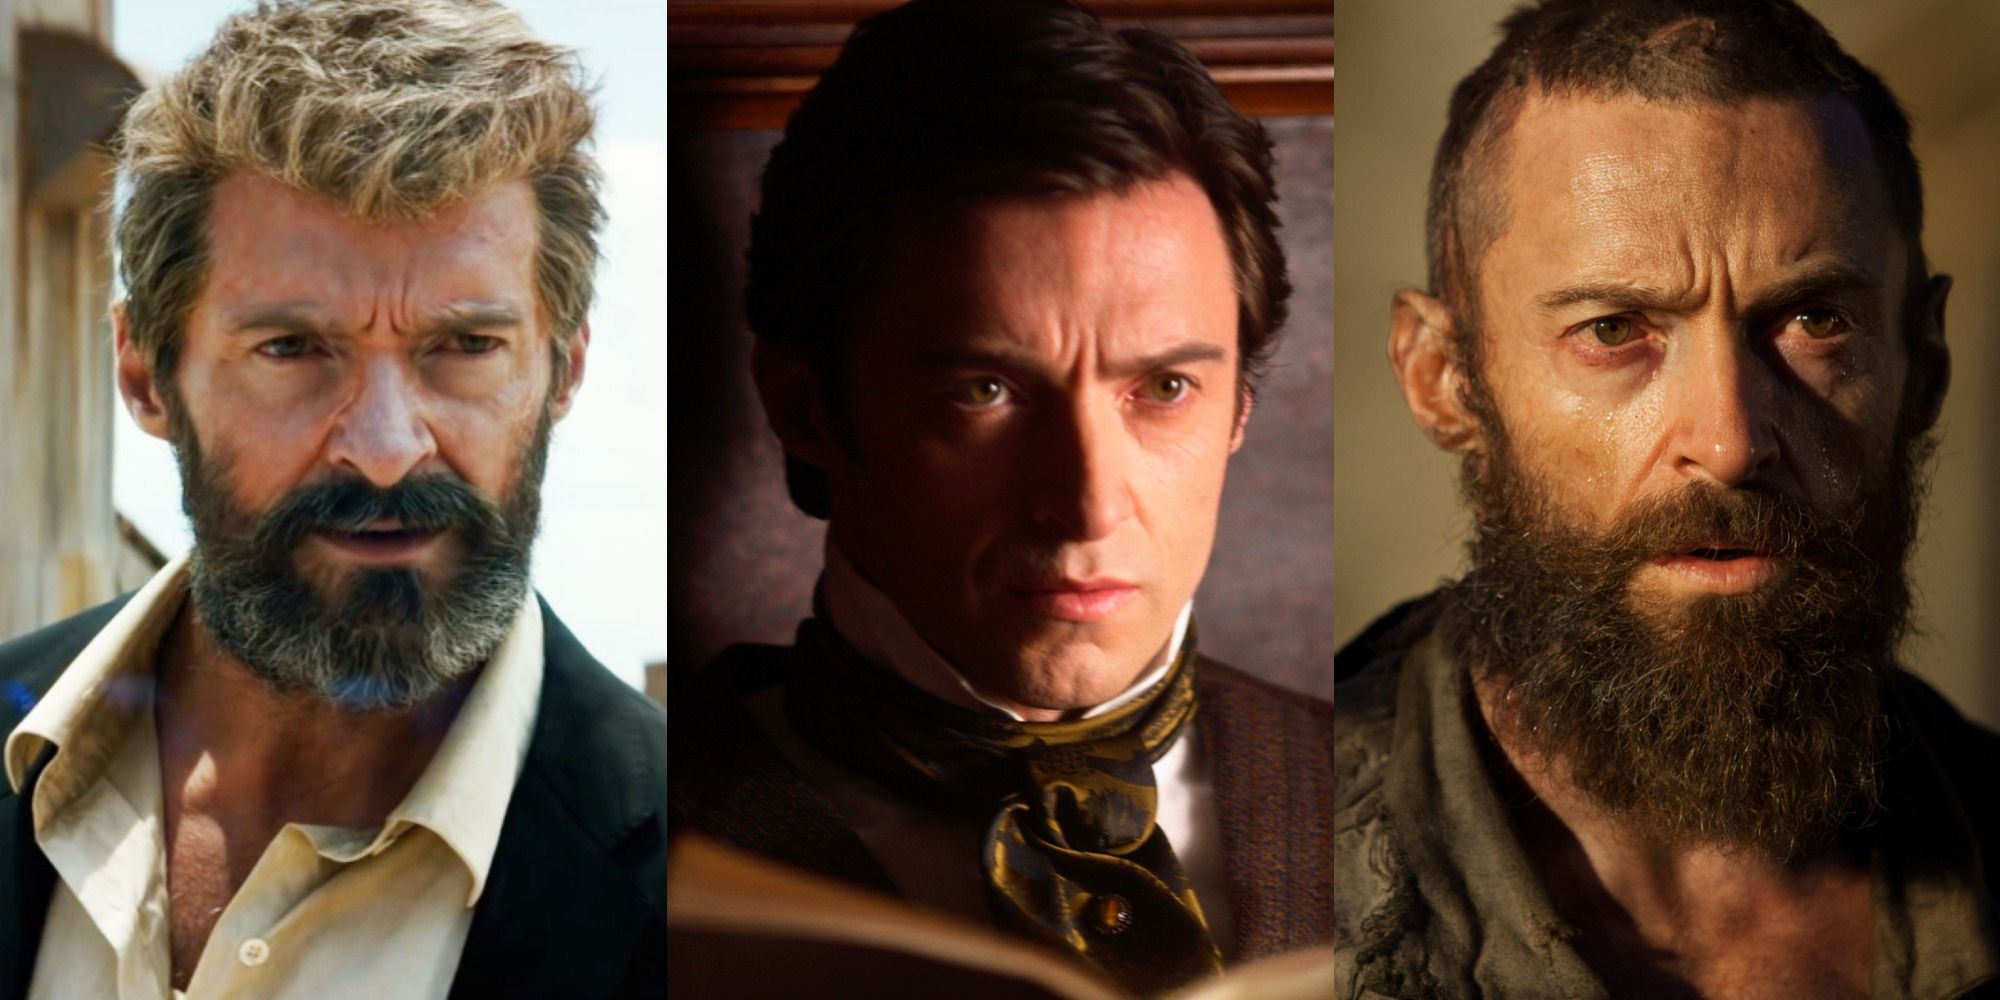 Hugh Jackman in Logan, The Prestige, and Les Mis